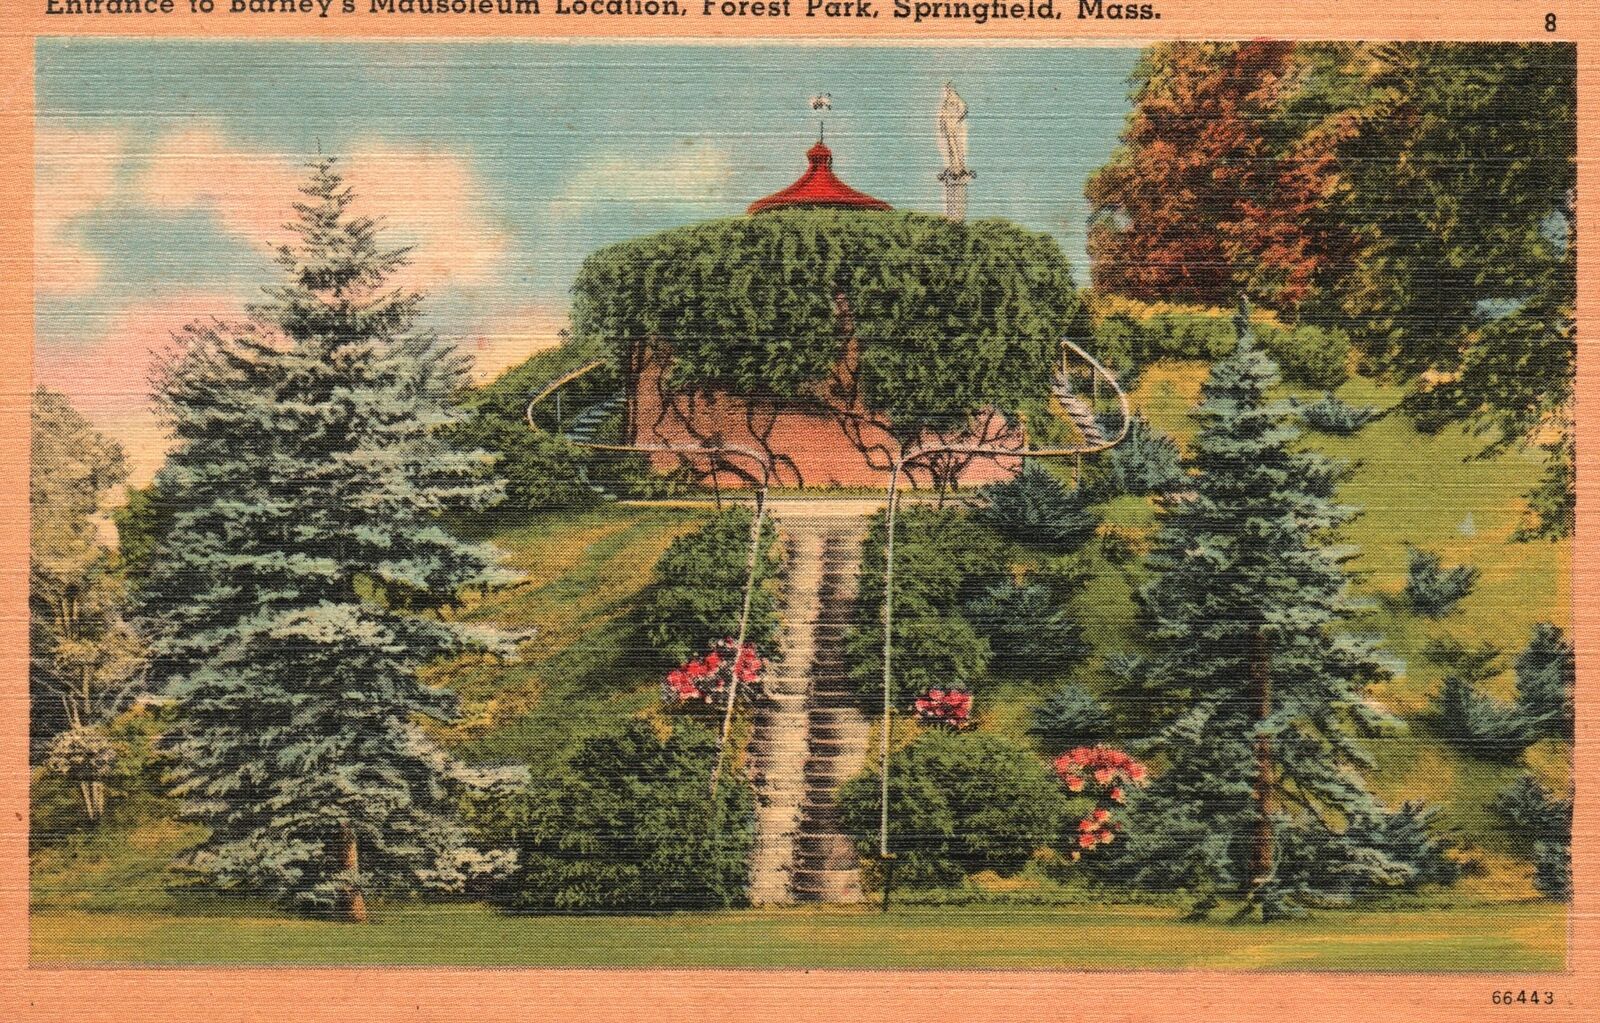 Springfield MA-Massachusetts, Entrance Barney\'s Mausoleum Forest Park Postcard